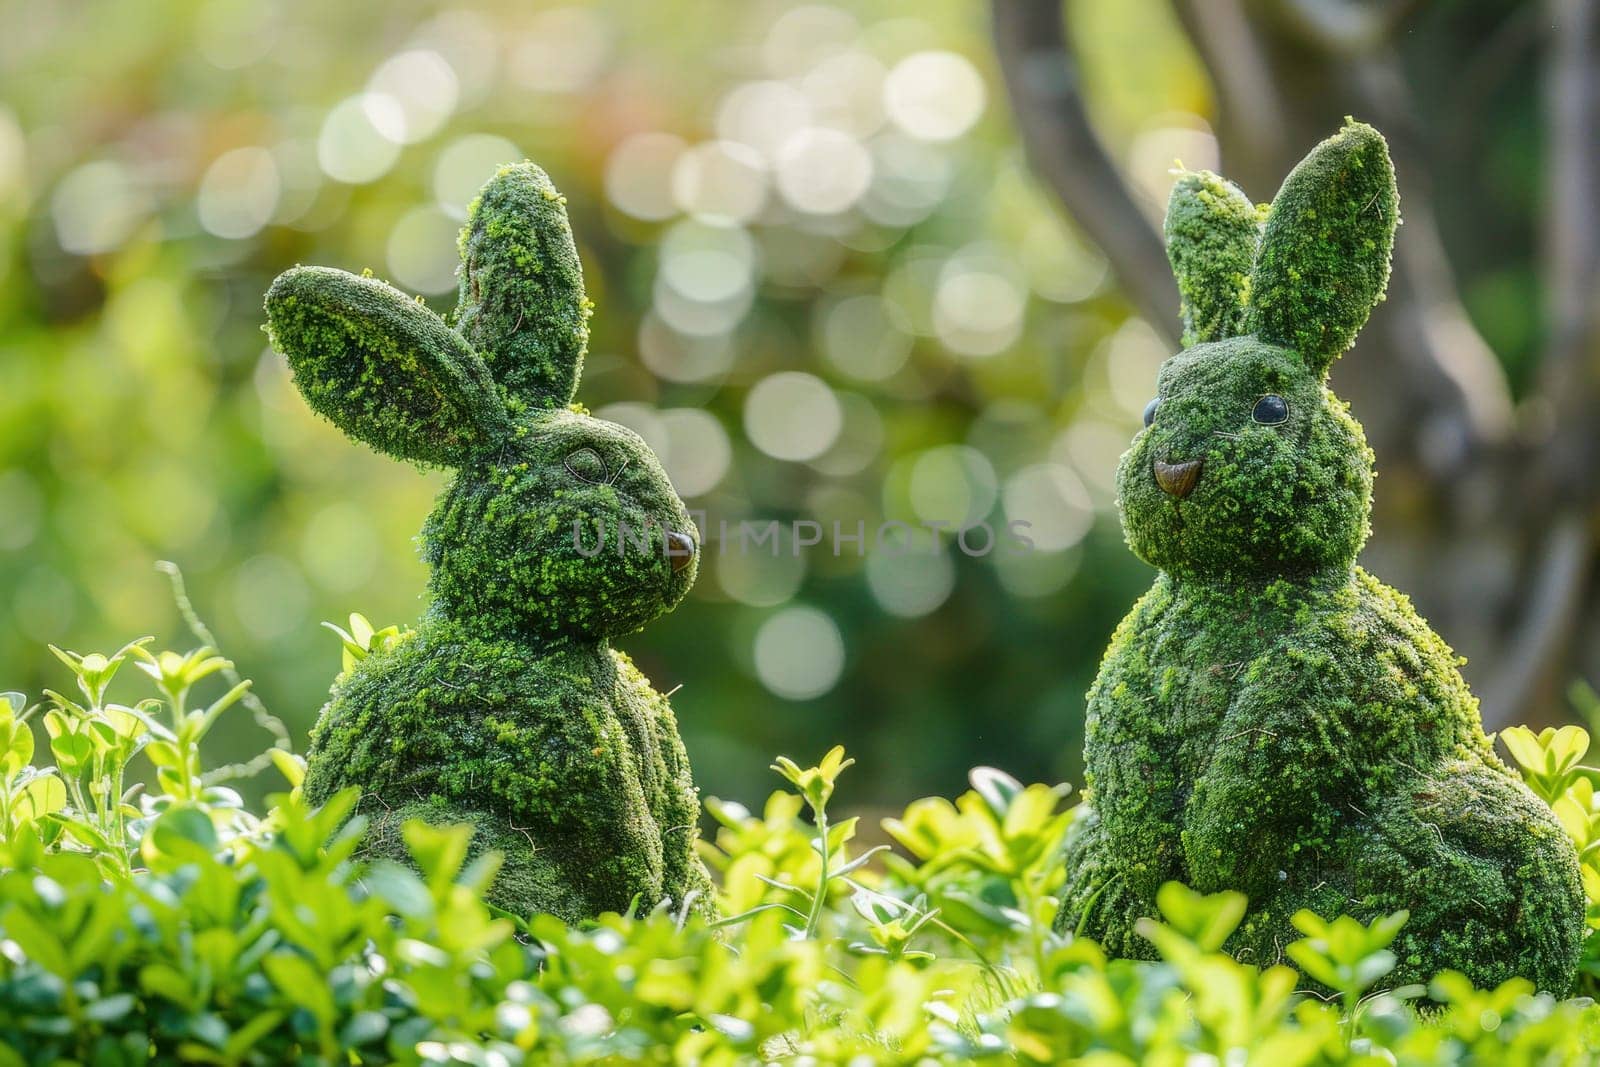 Topiary bunnies enjoying a peaceful moment in lush green grassy garden